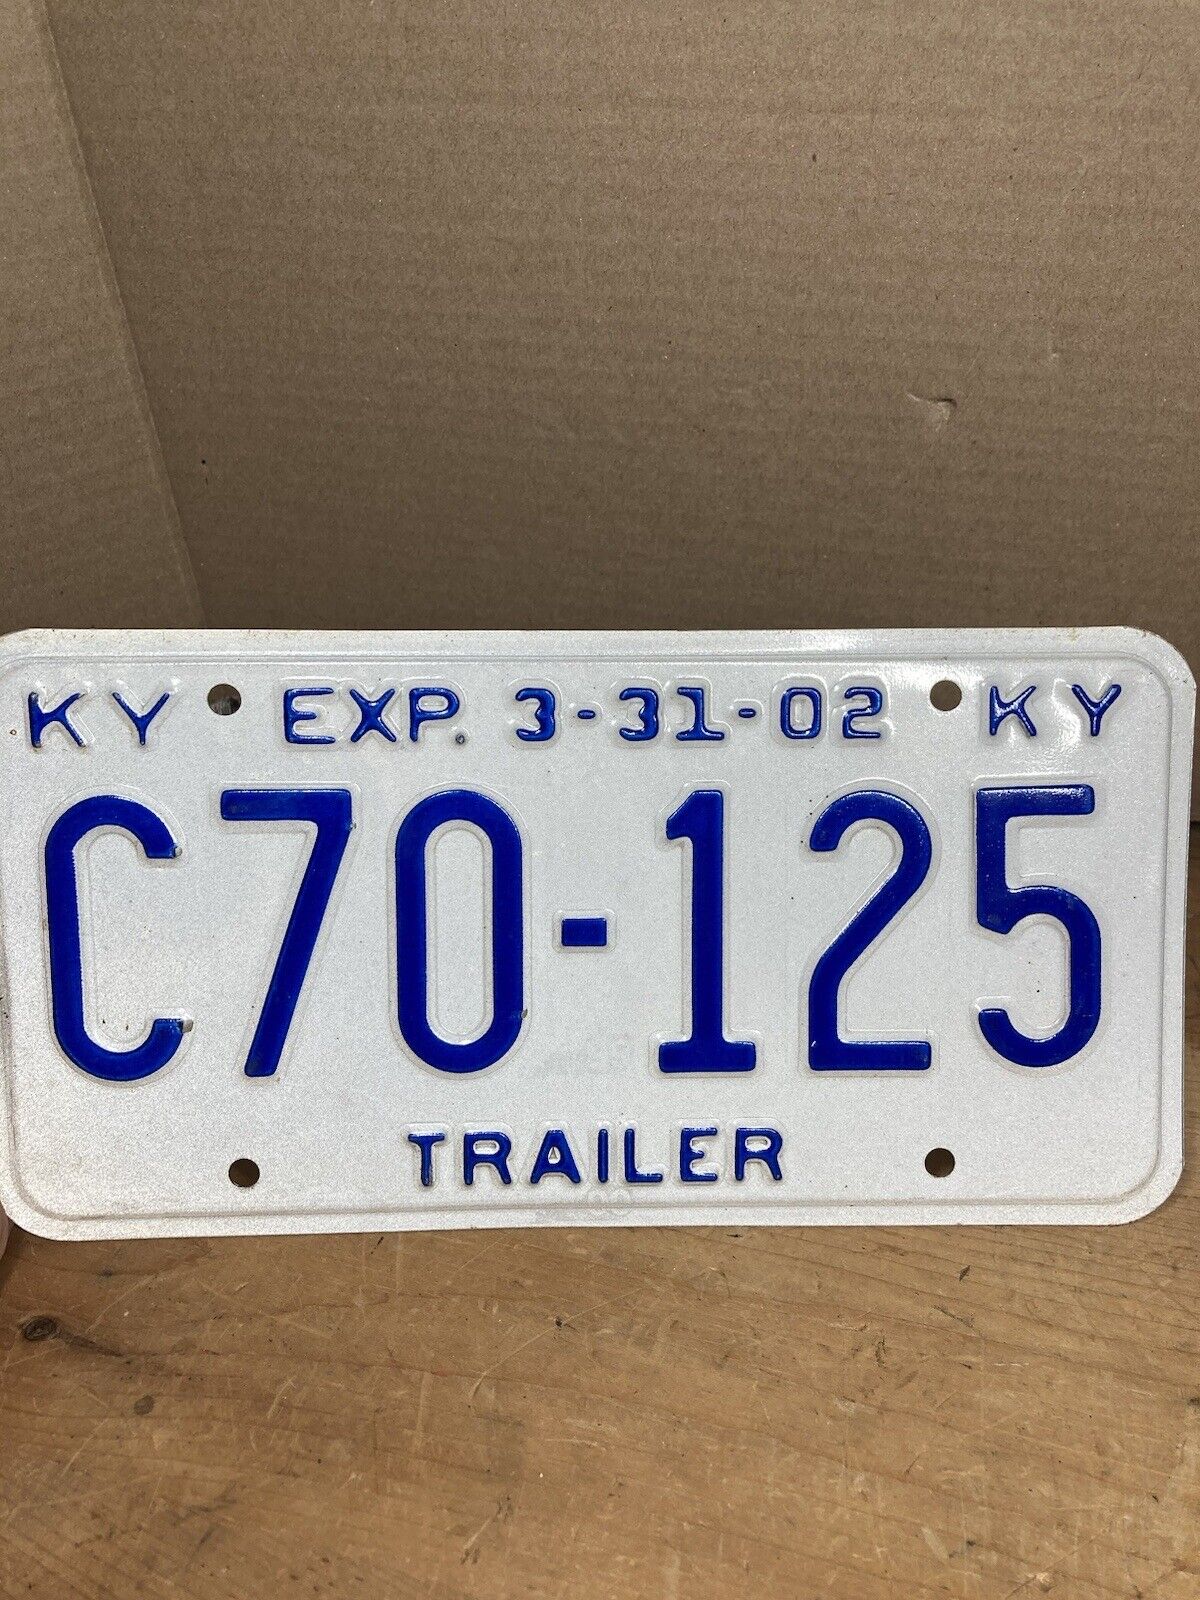 Ky Kentucky Trailer 2002 Expired License Plate C70-125